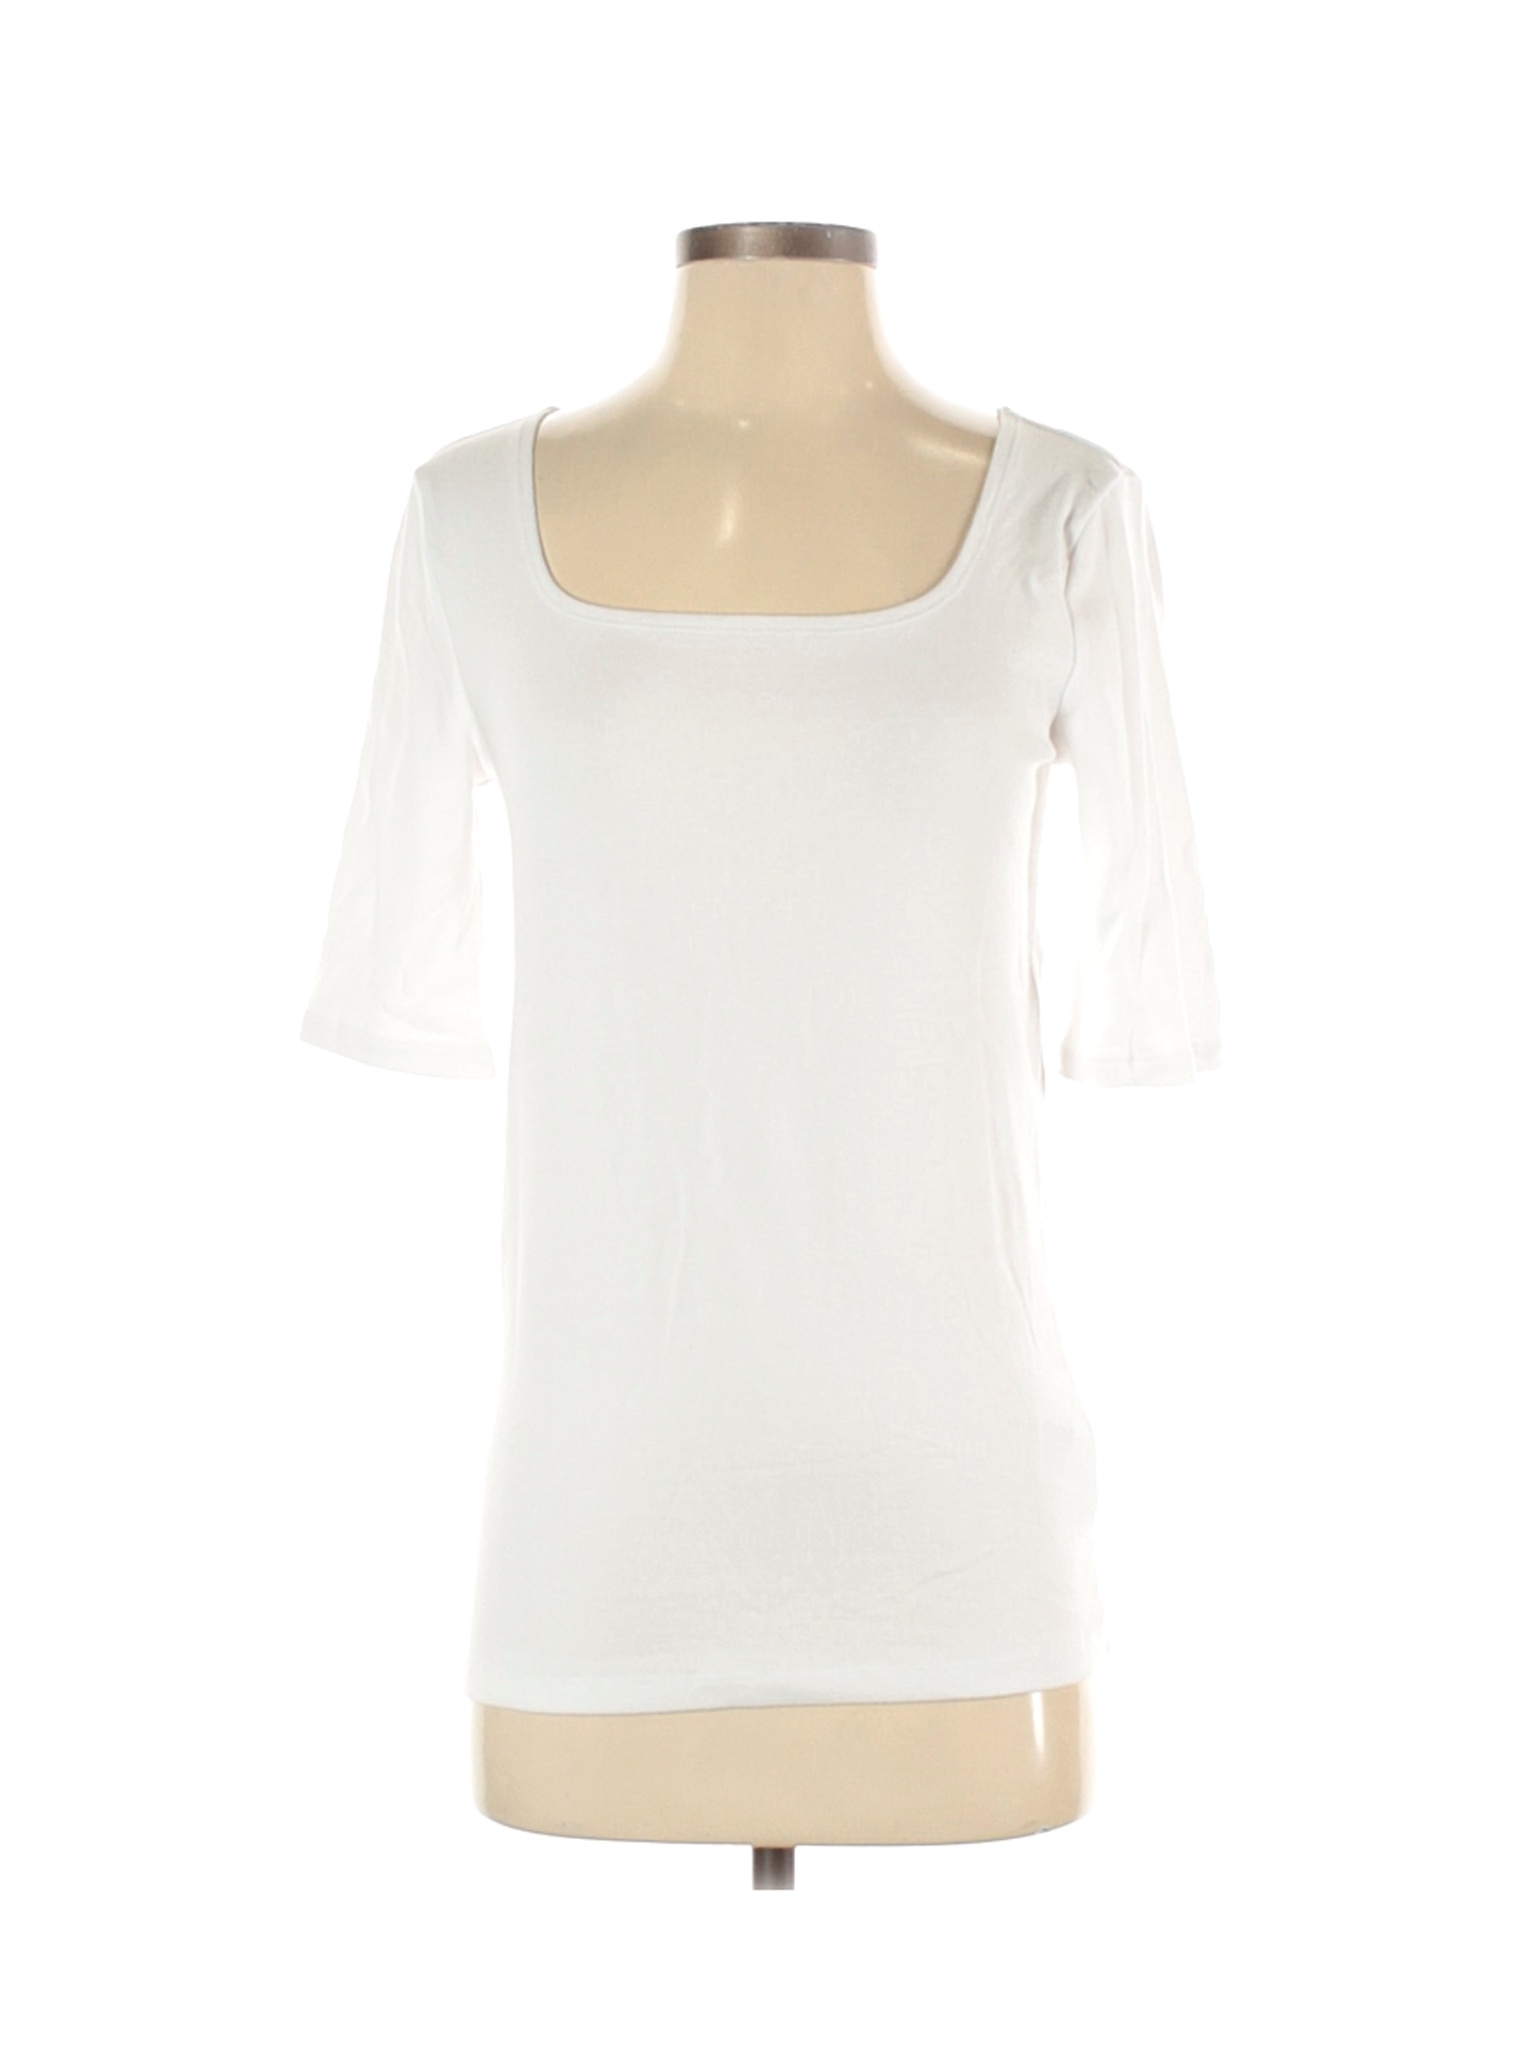 Gap Women White 3/4 Sleeve T-Shirt M | eBay